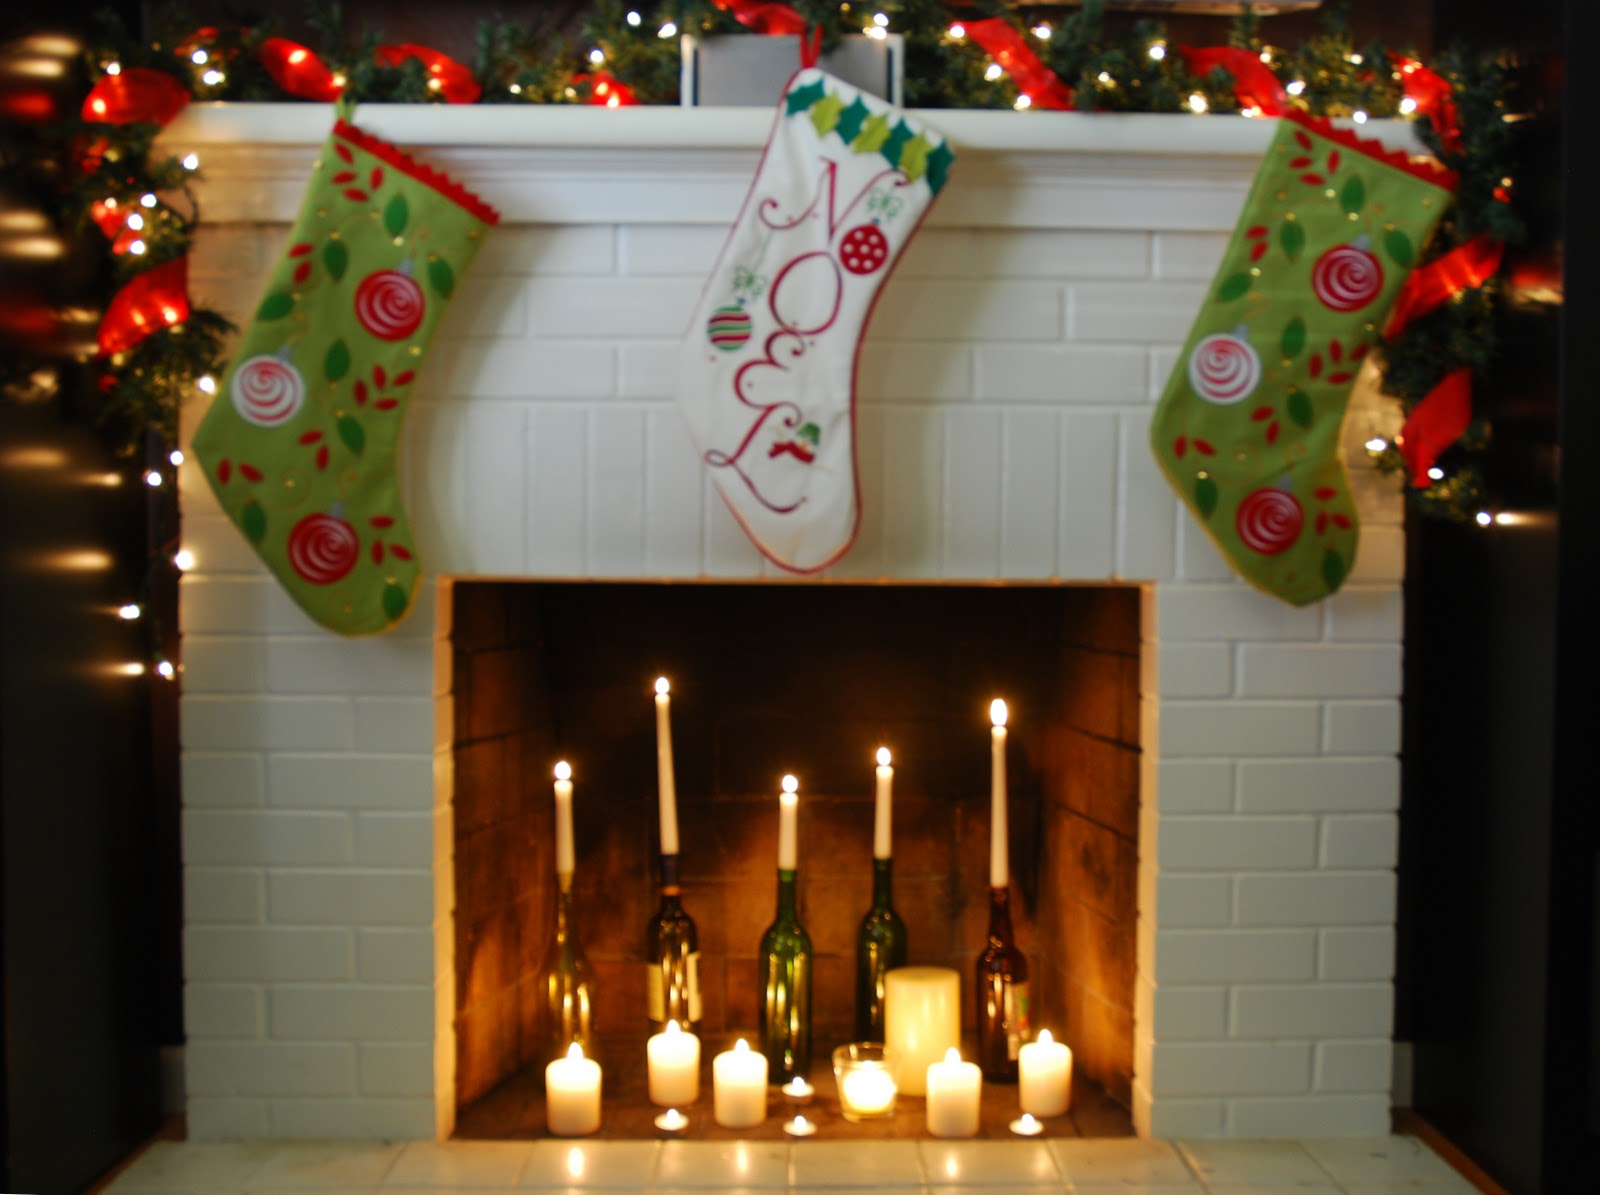 decorated-stocking-ideas